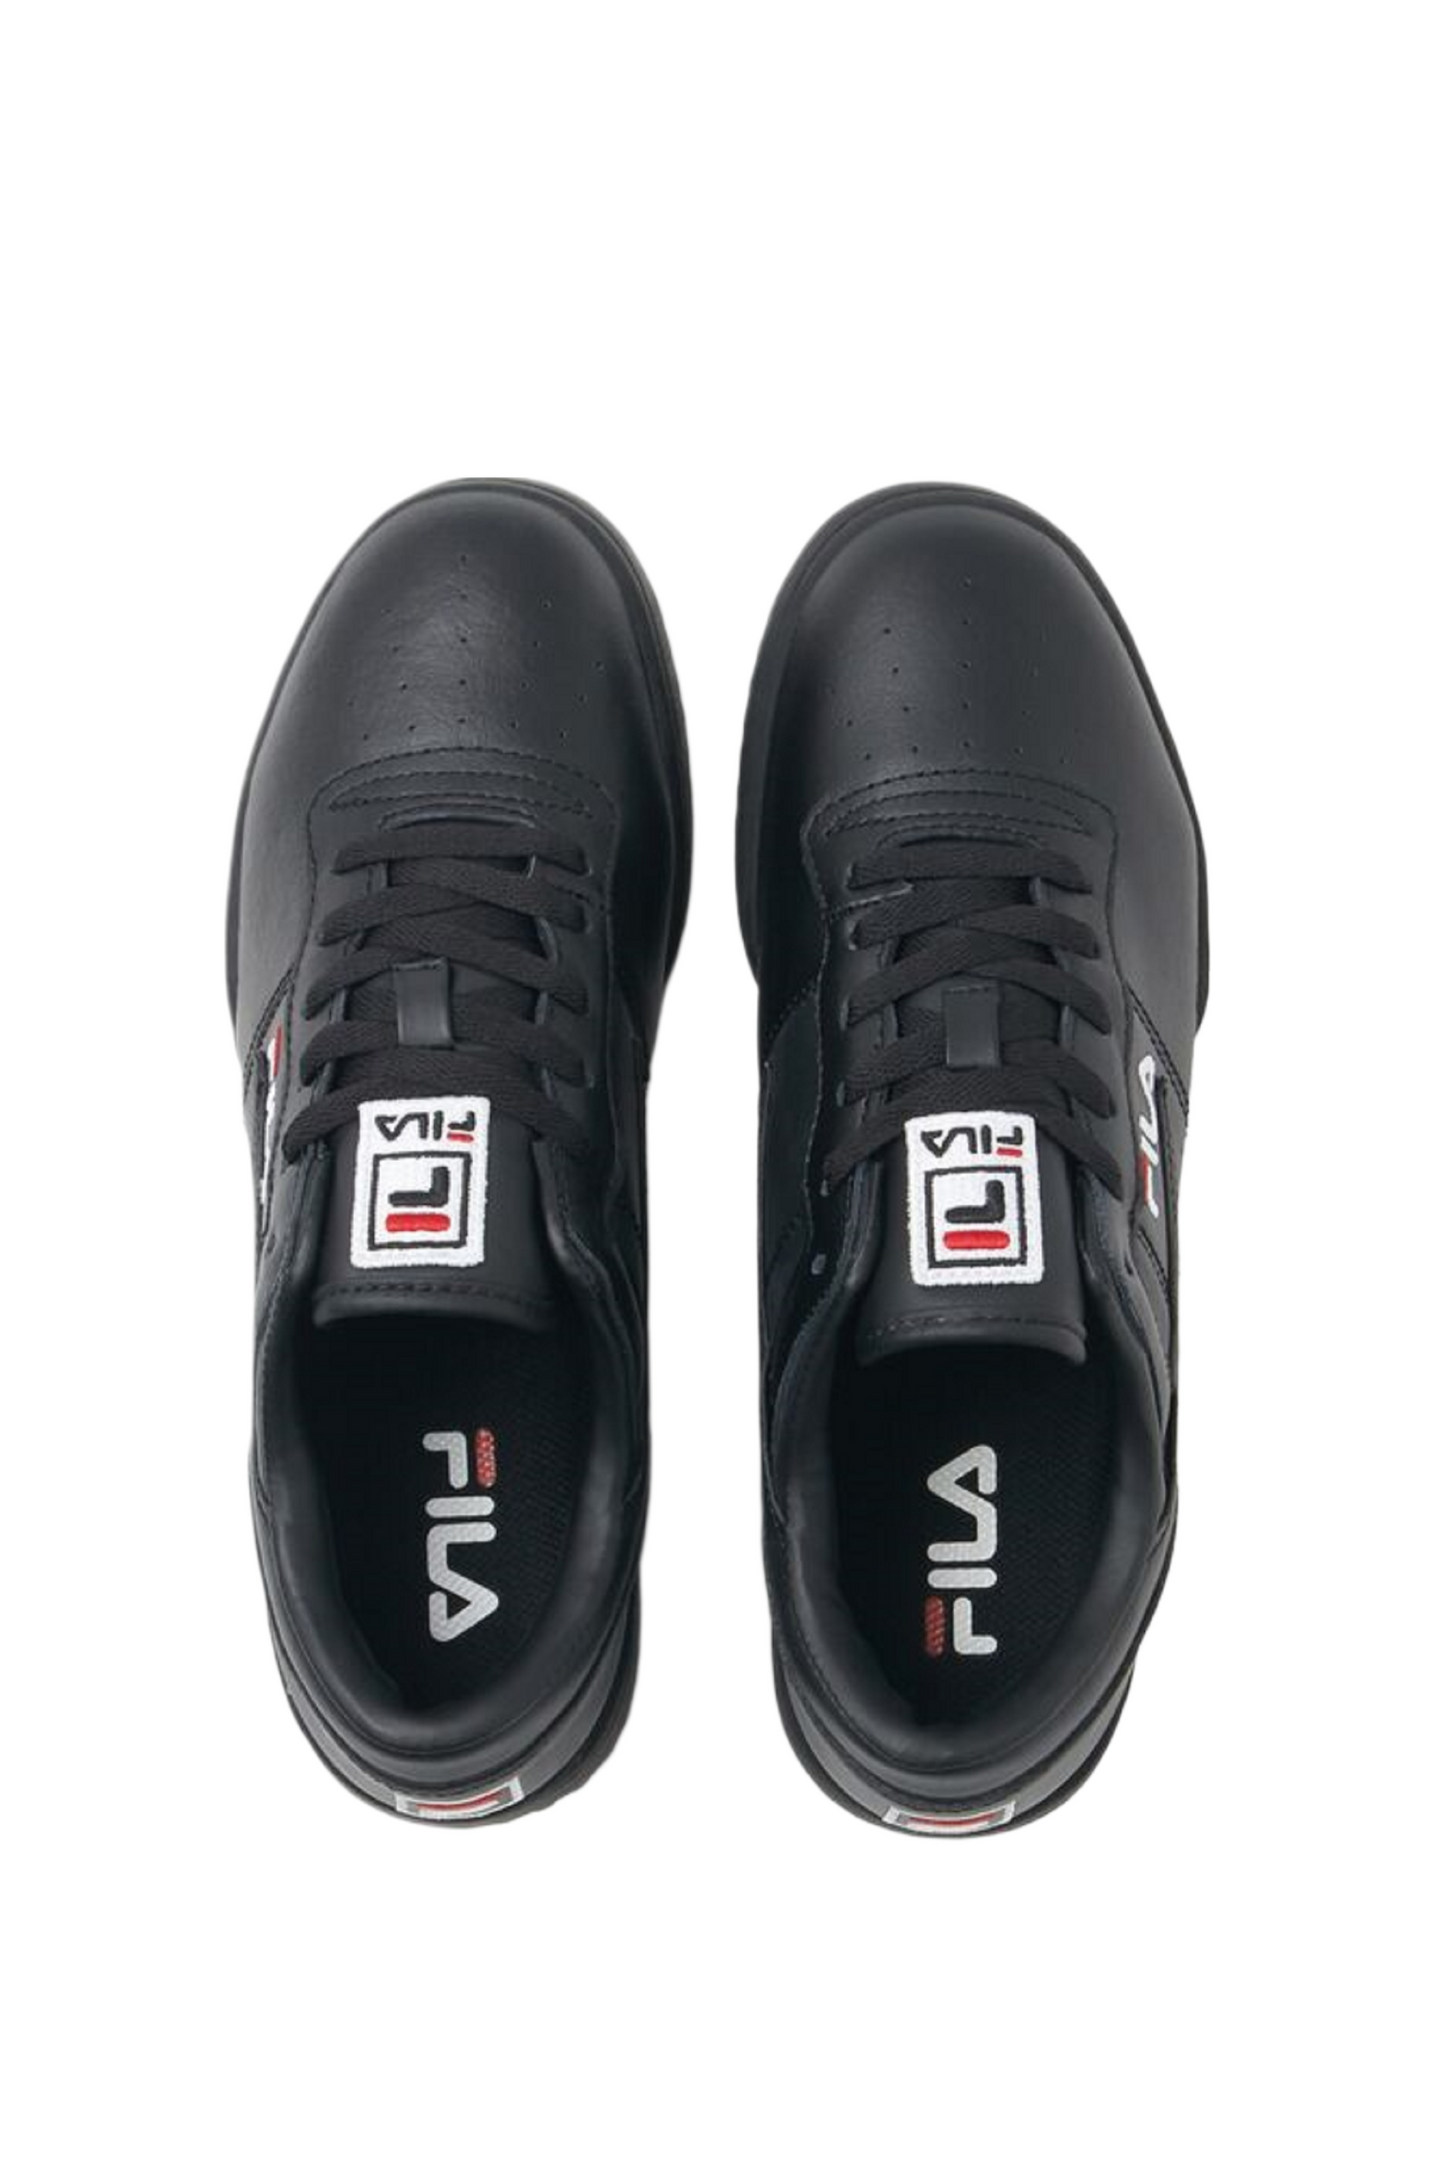 Fila Men Original Fitness Black / White / Red Tennis Shoe 11F16LT-970